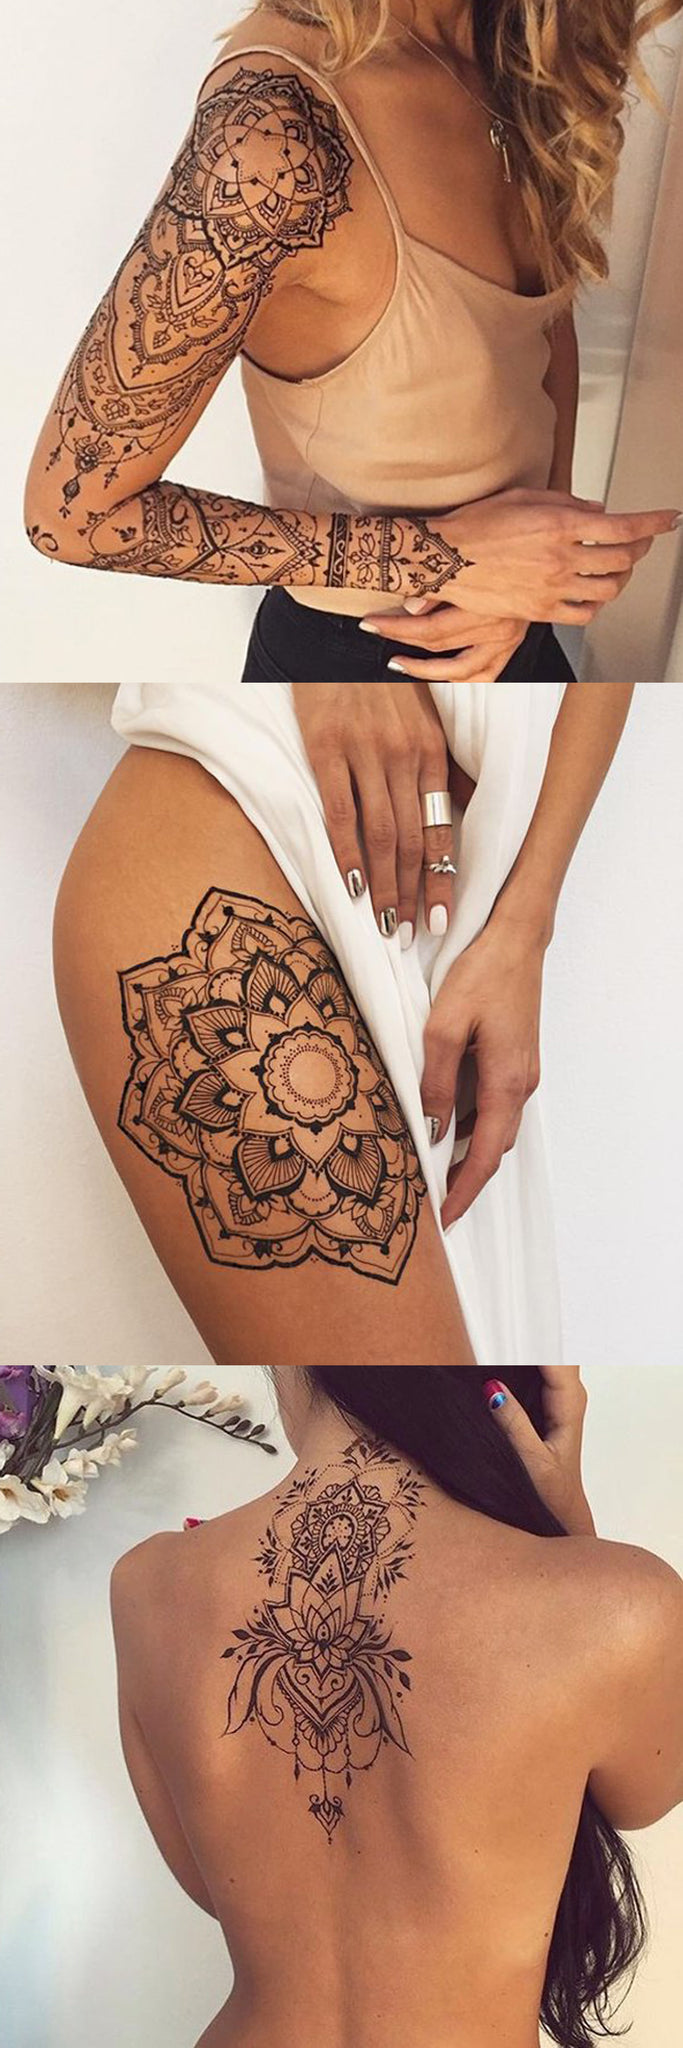 Large Geometric Mandala Tattoo Ideas Design & Placement - Full Arm Sleeve Lotus Tatt - Spine Back Neck Tat - Thigh Tatouage - MyBodiArt.com